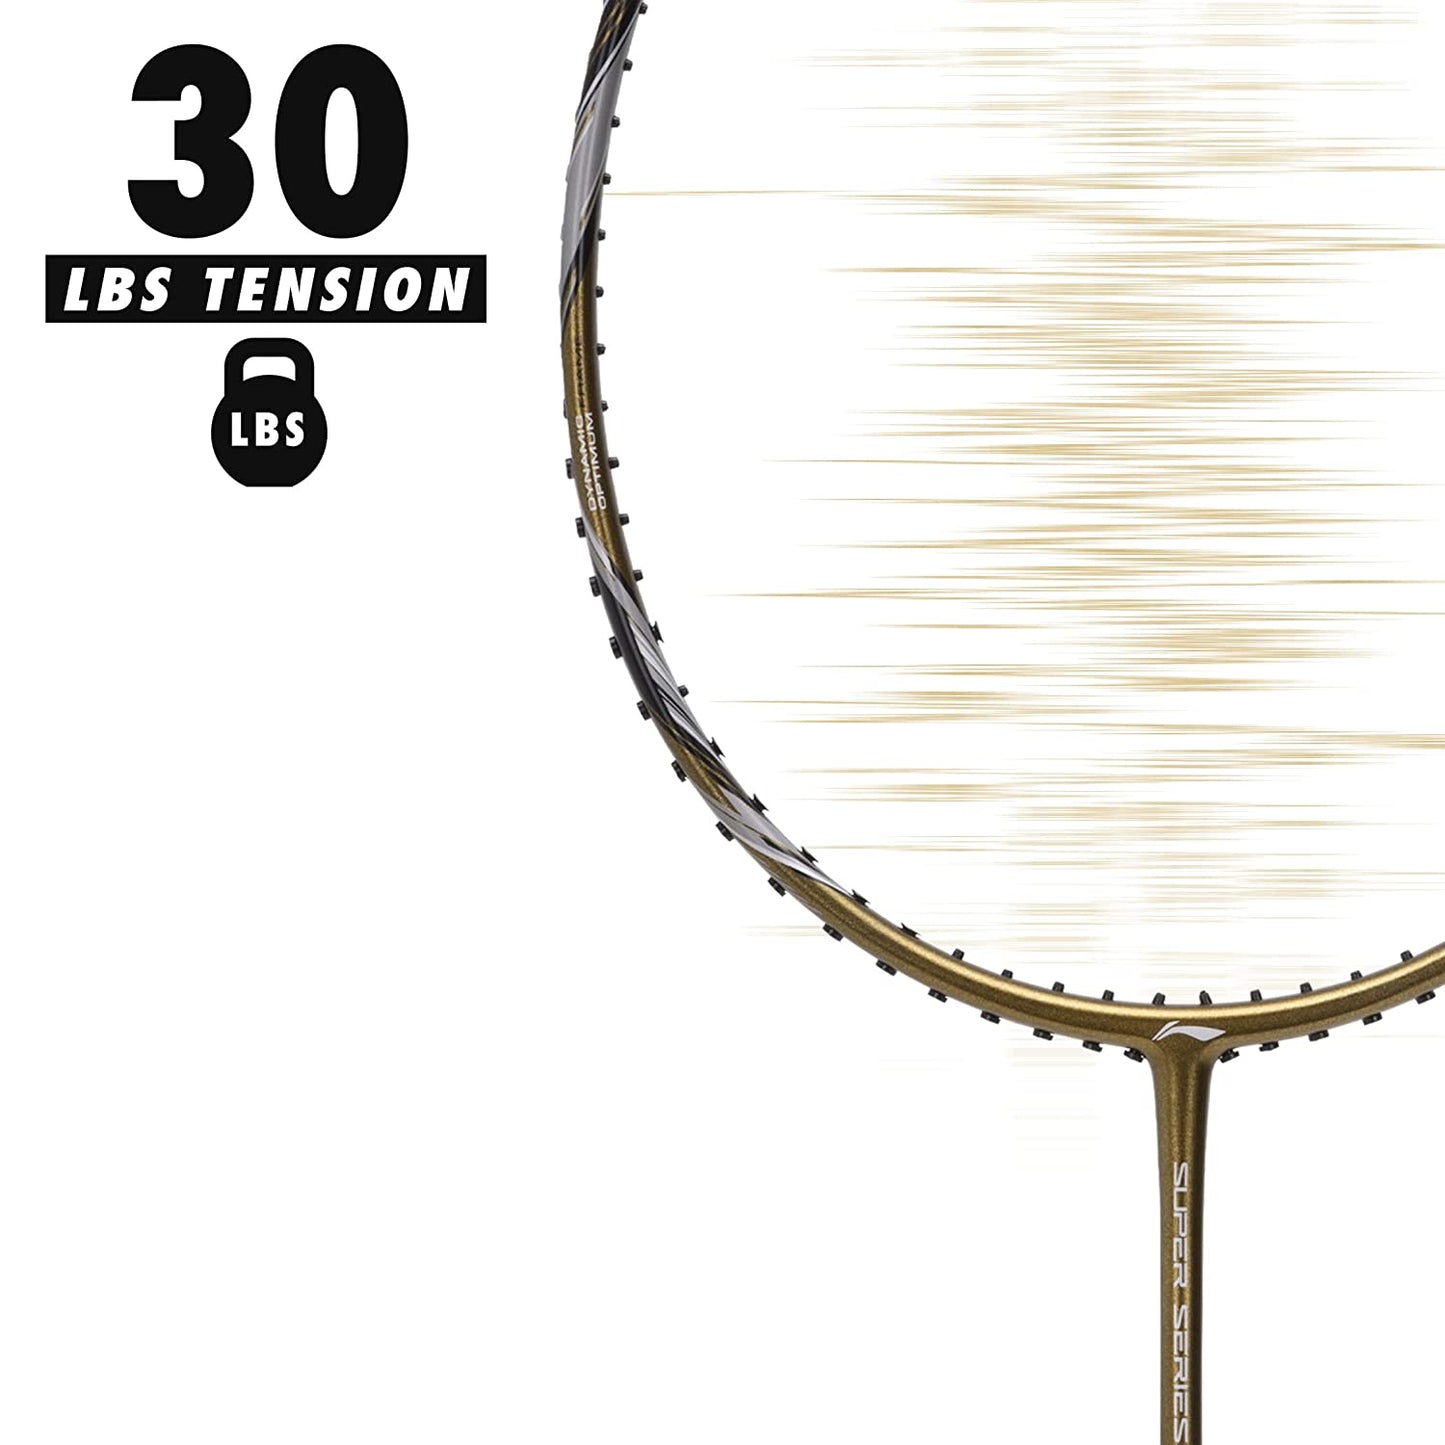 Li-Ning Super Series SS900 Strung Badminton Racquet - Olive Gold/Grey - Best Price online Prokicksports.com